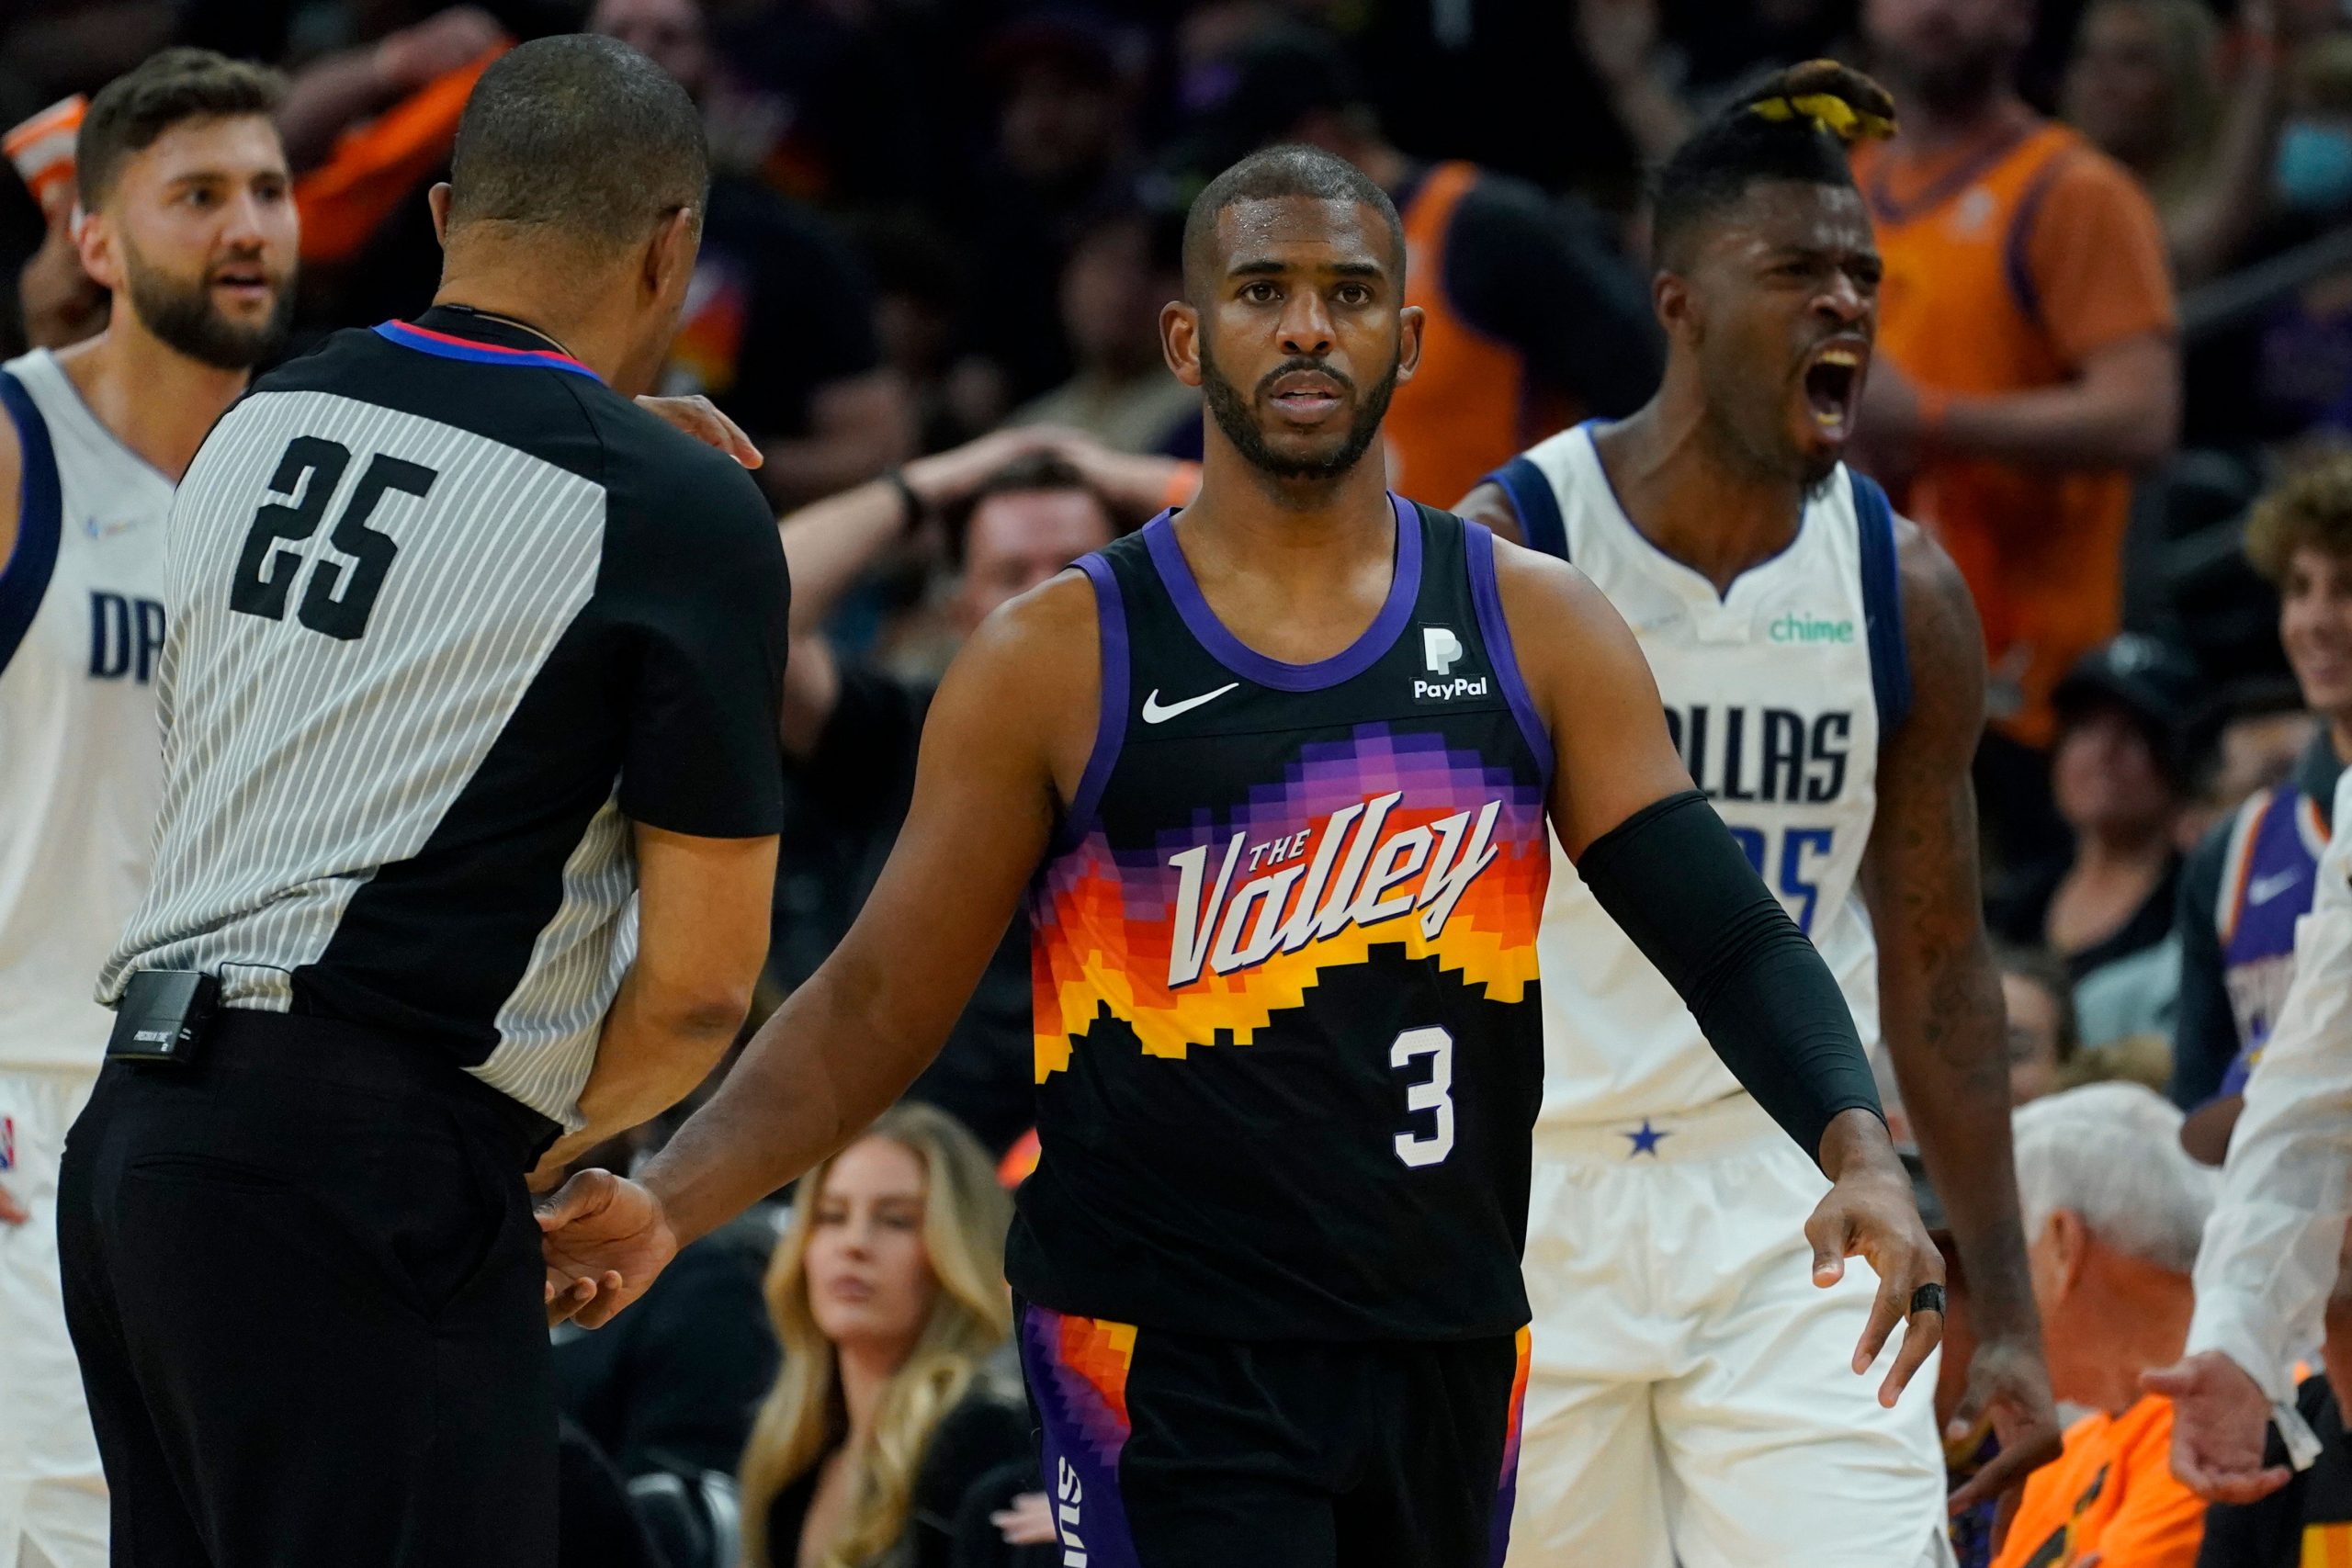 NBA: Phoenix Suns blow past Dallas Mavericks as Paul makes another stellar fourth